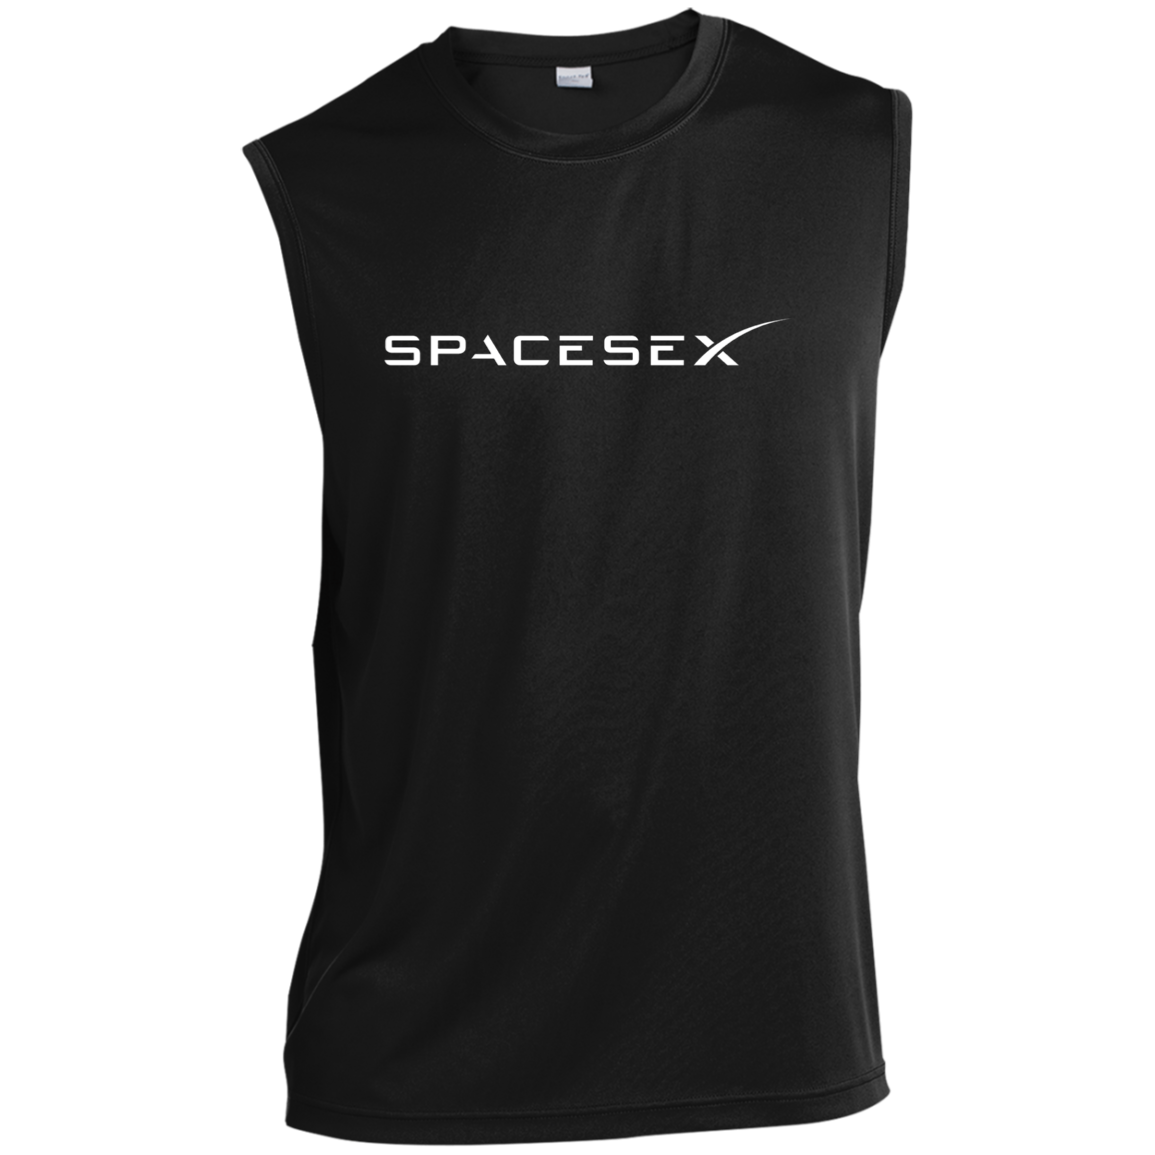 "SpaceseX" Men’s Sleeveless Performance Tee